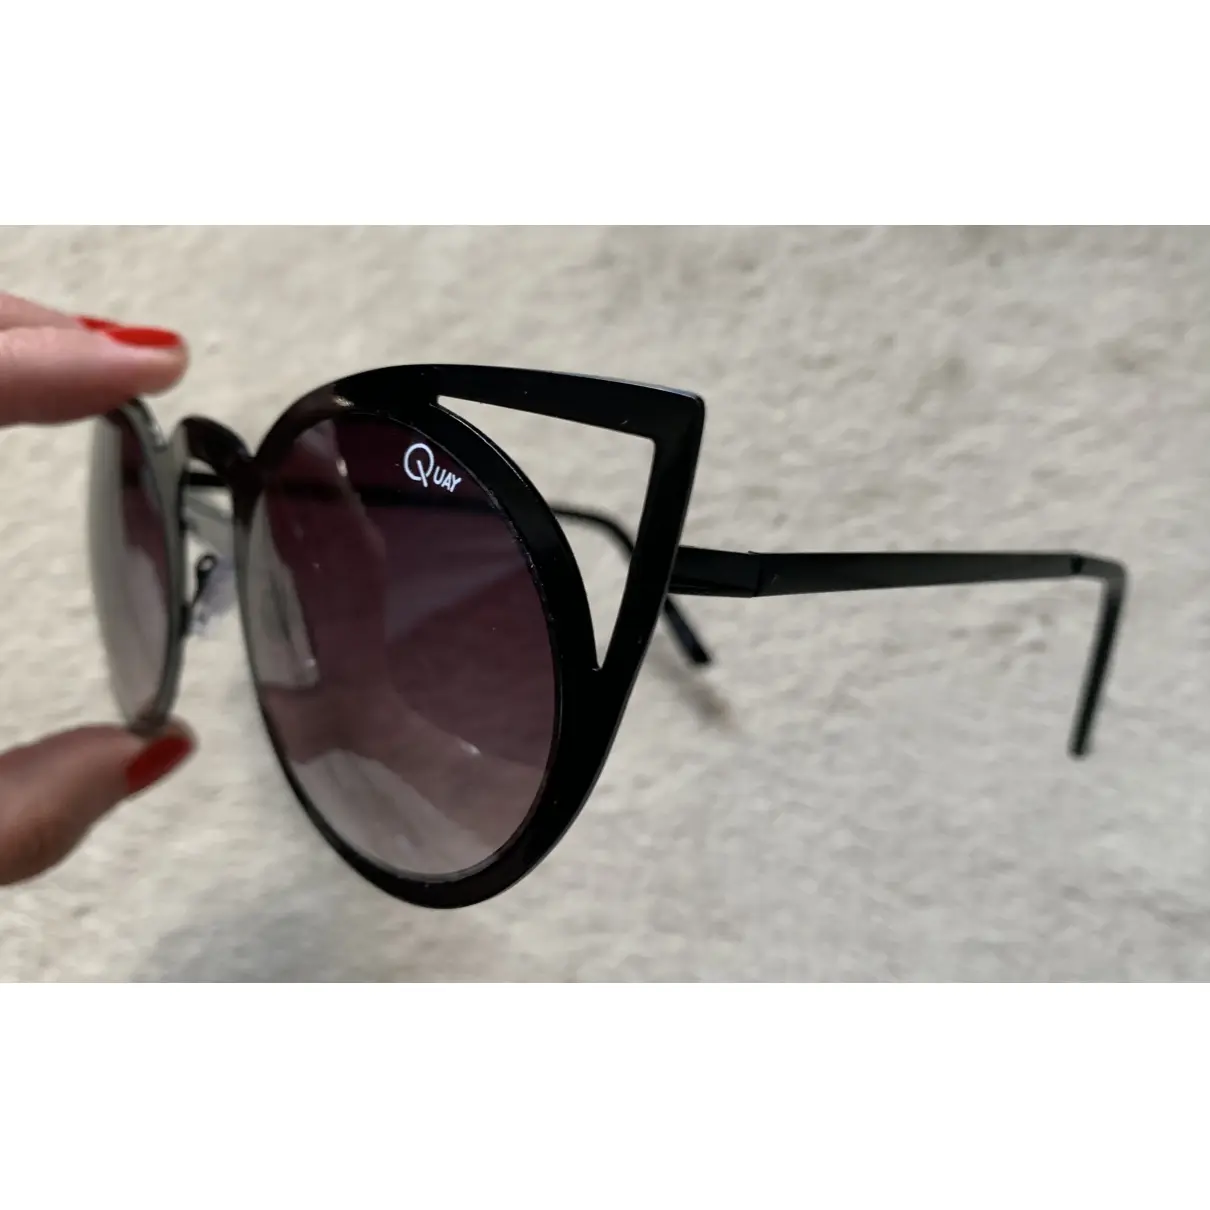 Buy Quay Australia Sunglasses online